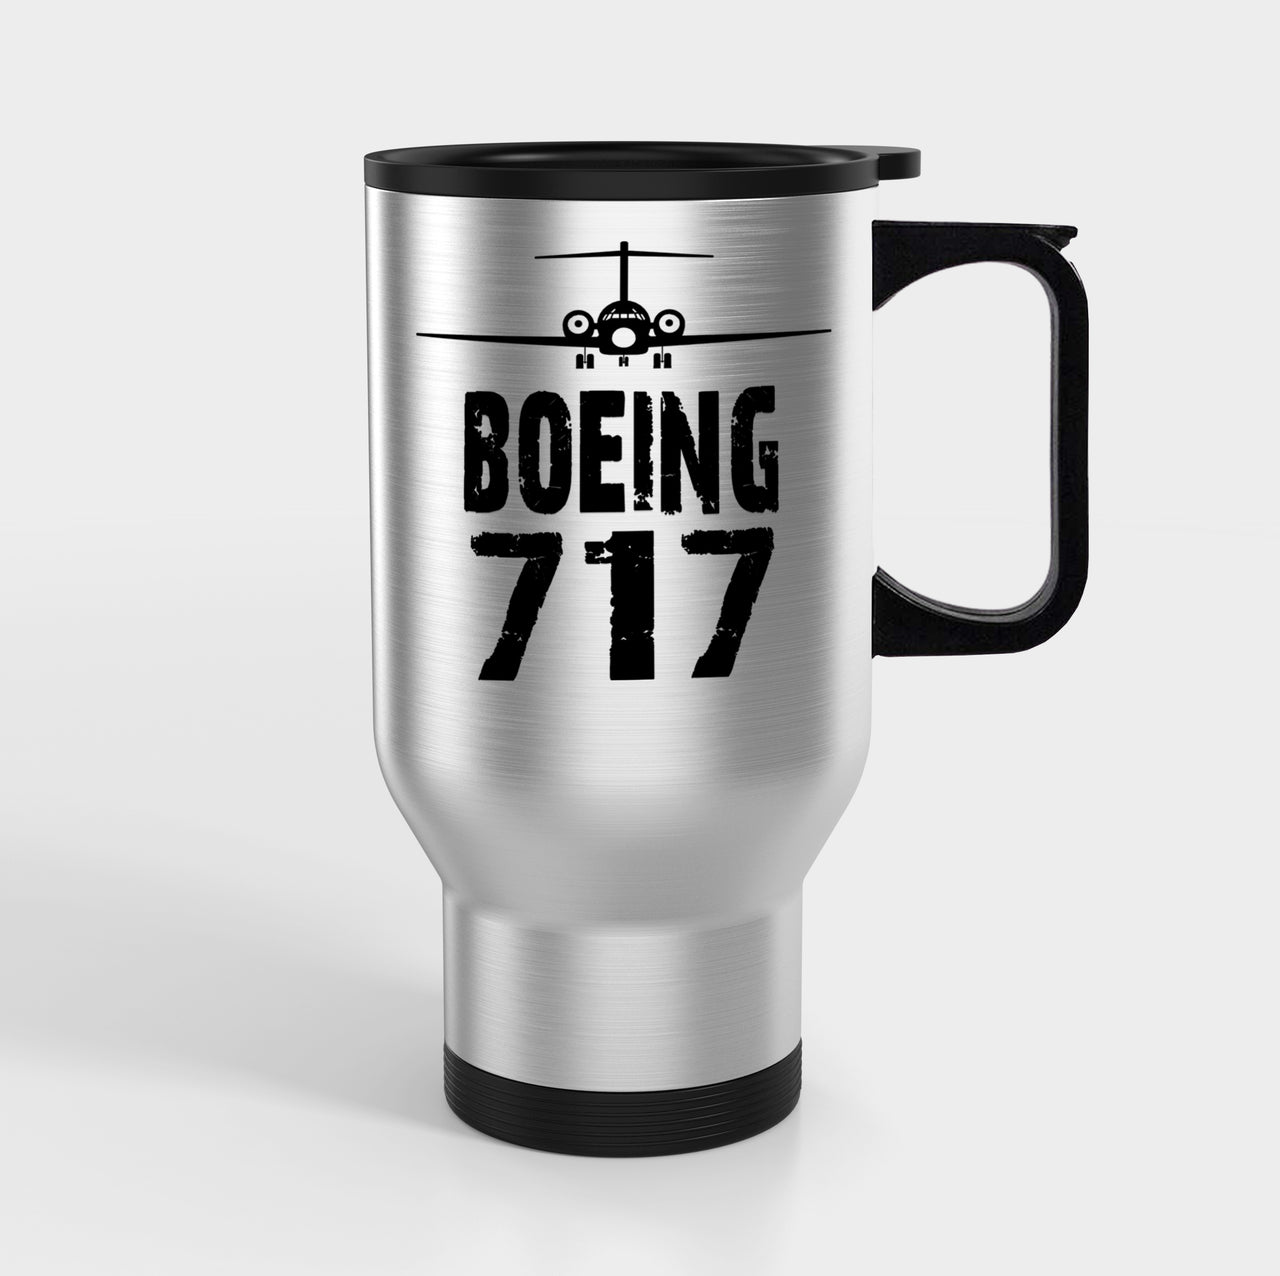 Boeing 717 & Plane Designed Travel Mugs (With Holder)